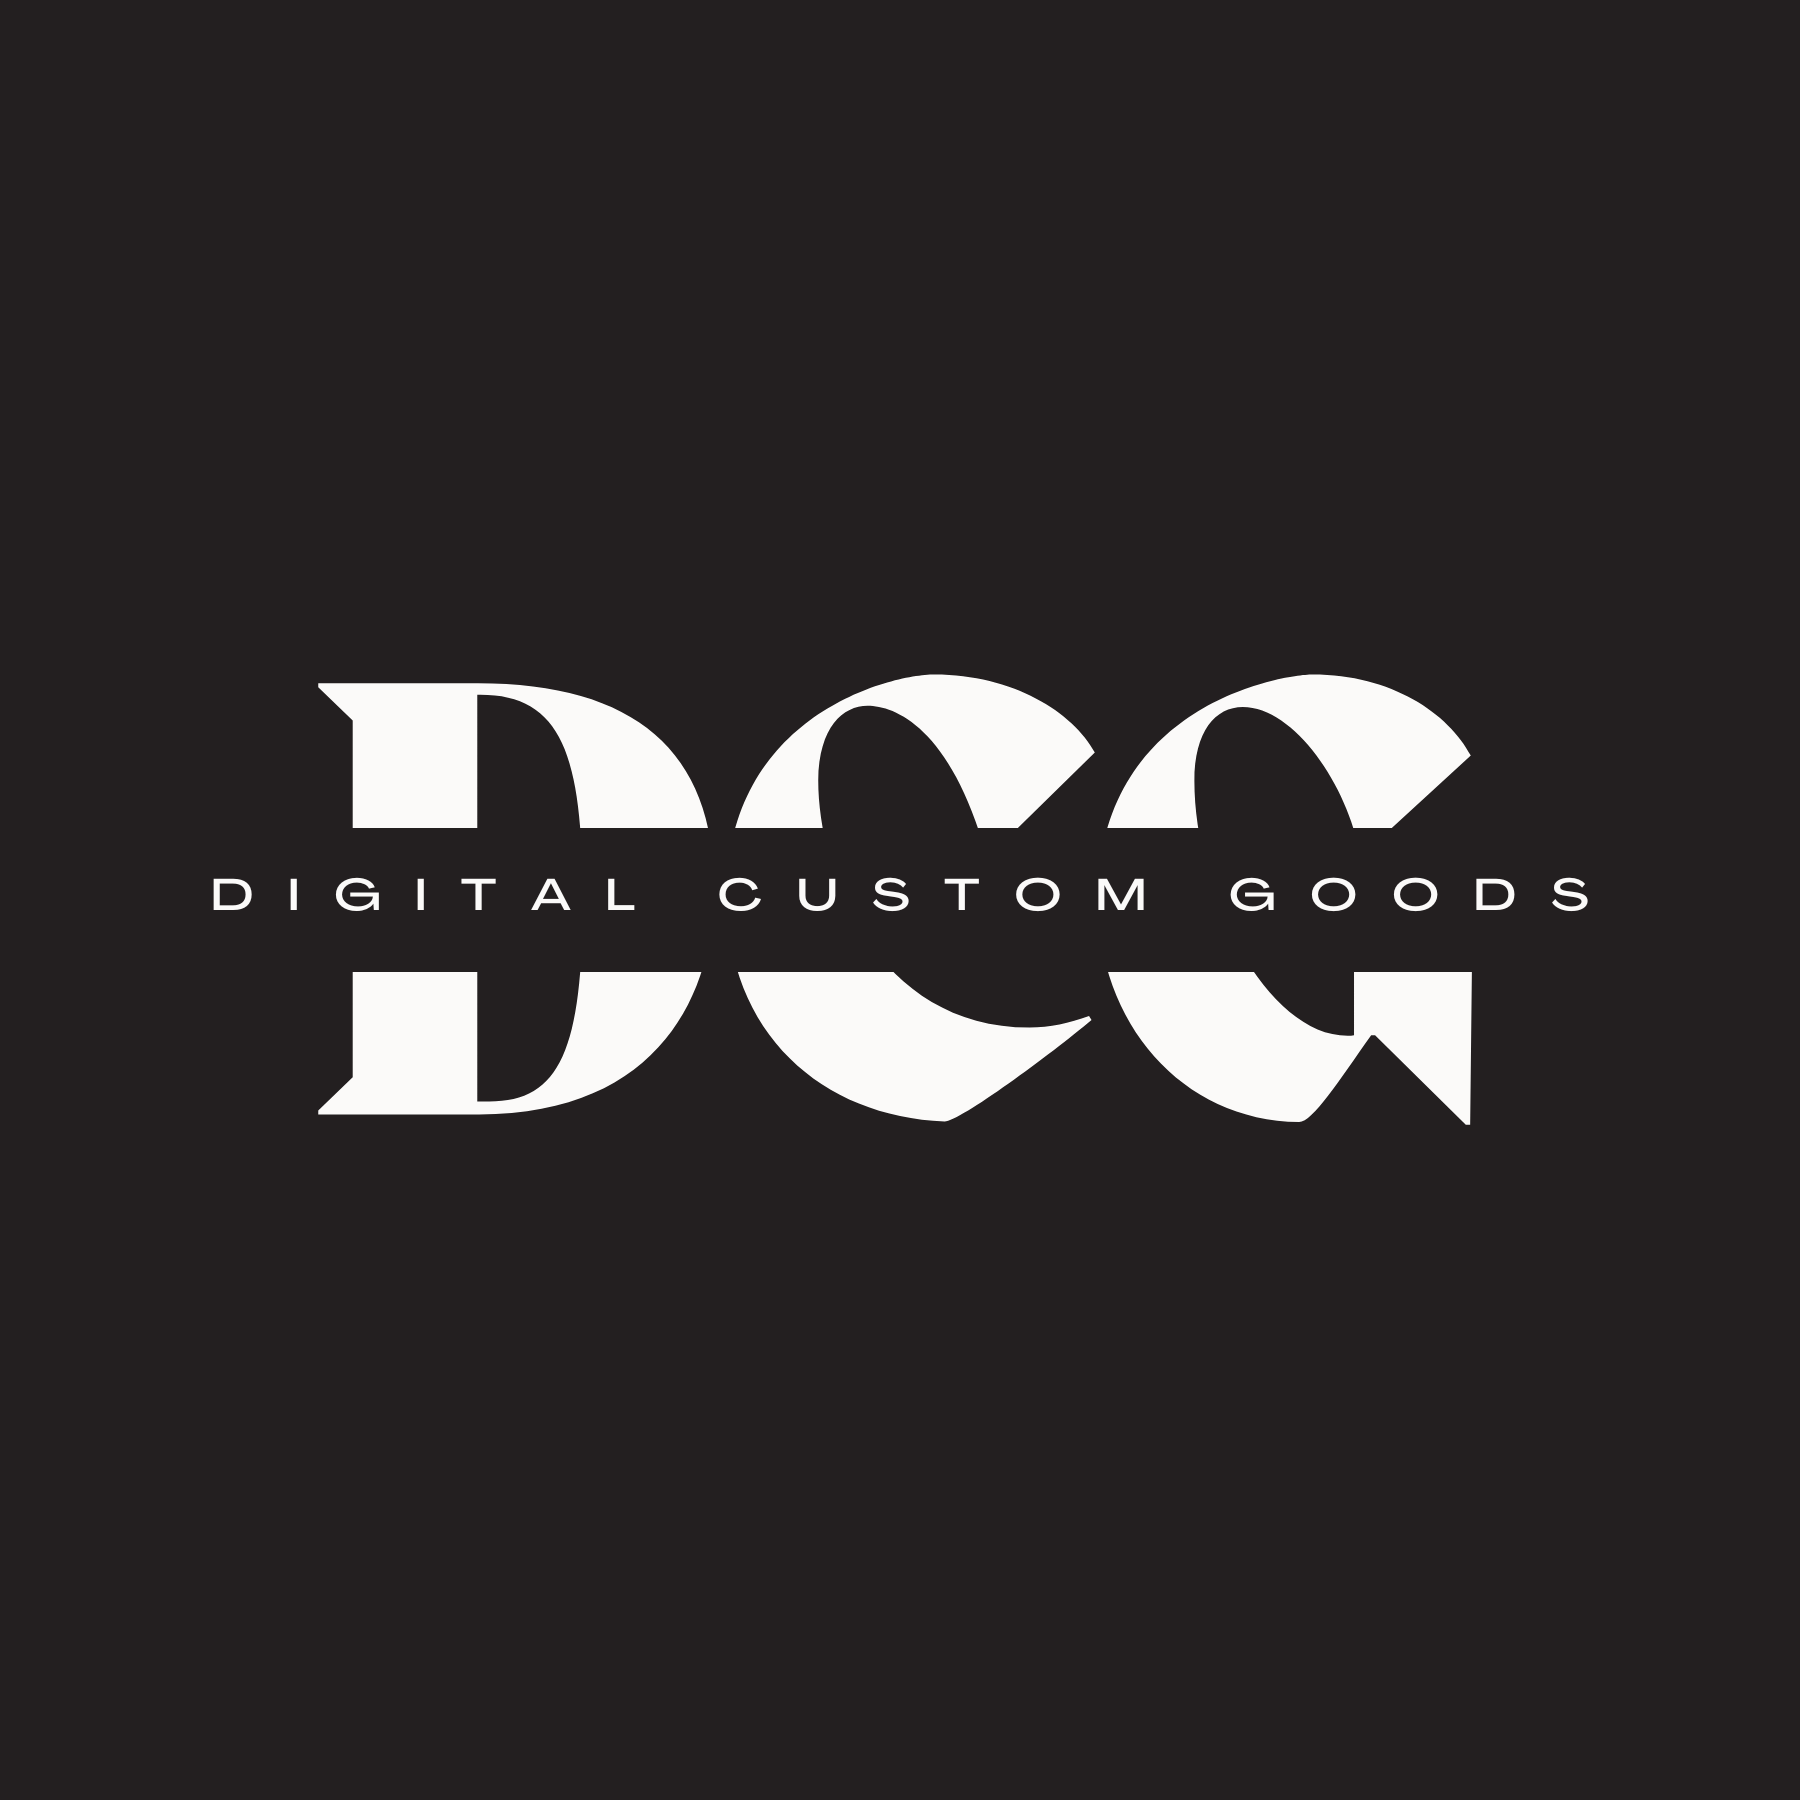 Digital Custom Goods